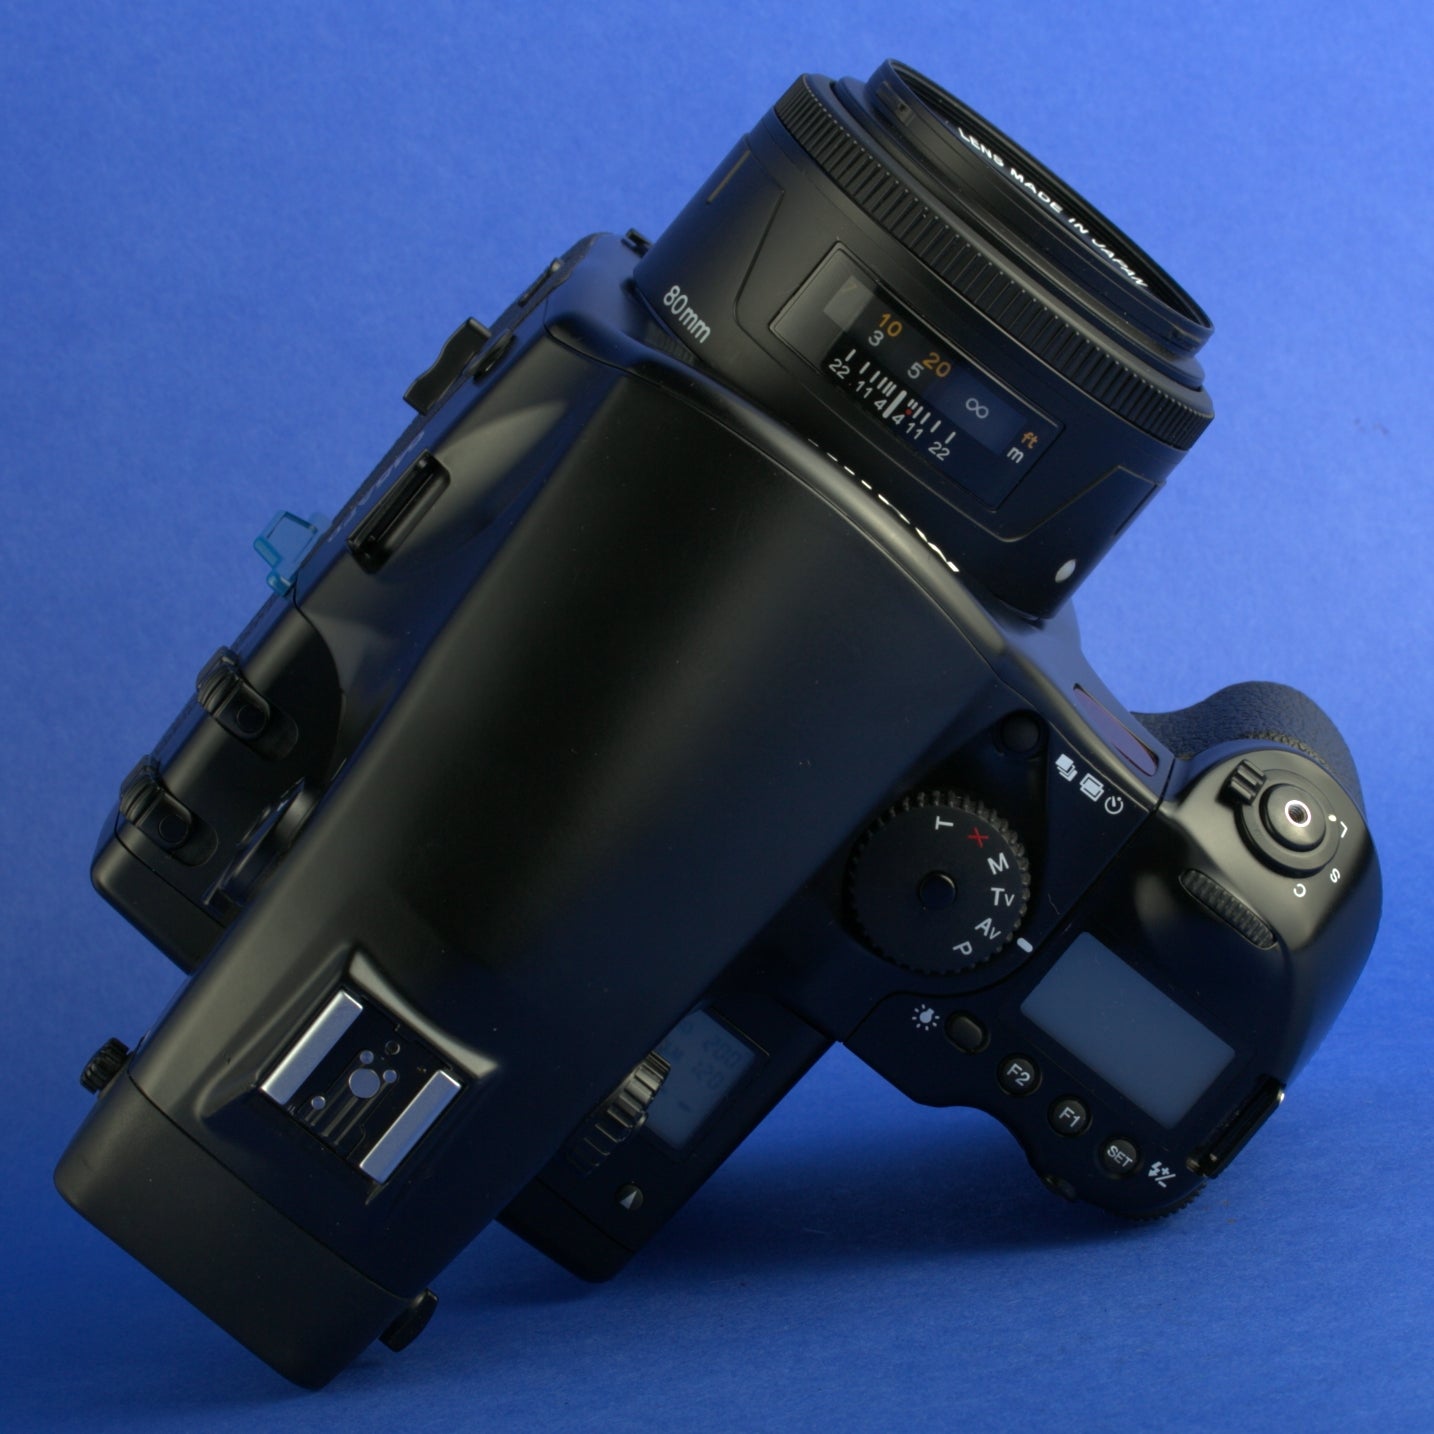 Mamiya 645 AFD Medium Format Camera Kit Film Tested Beautiful Condition